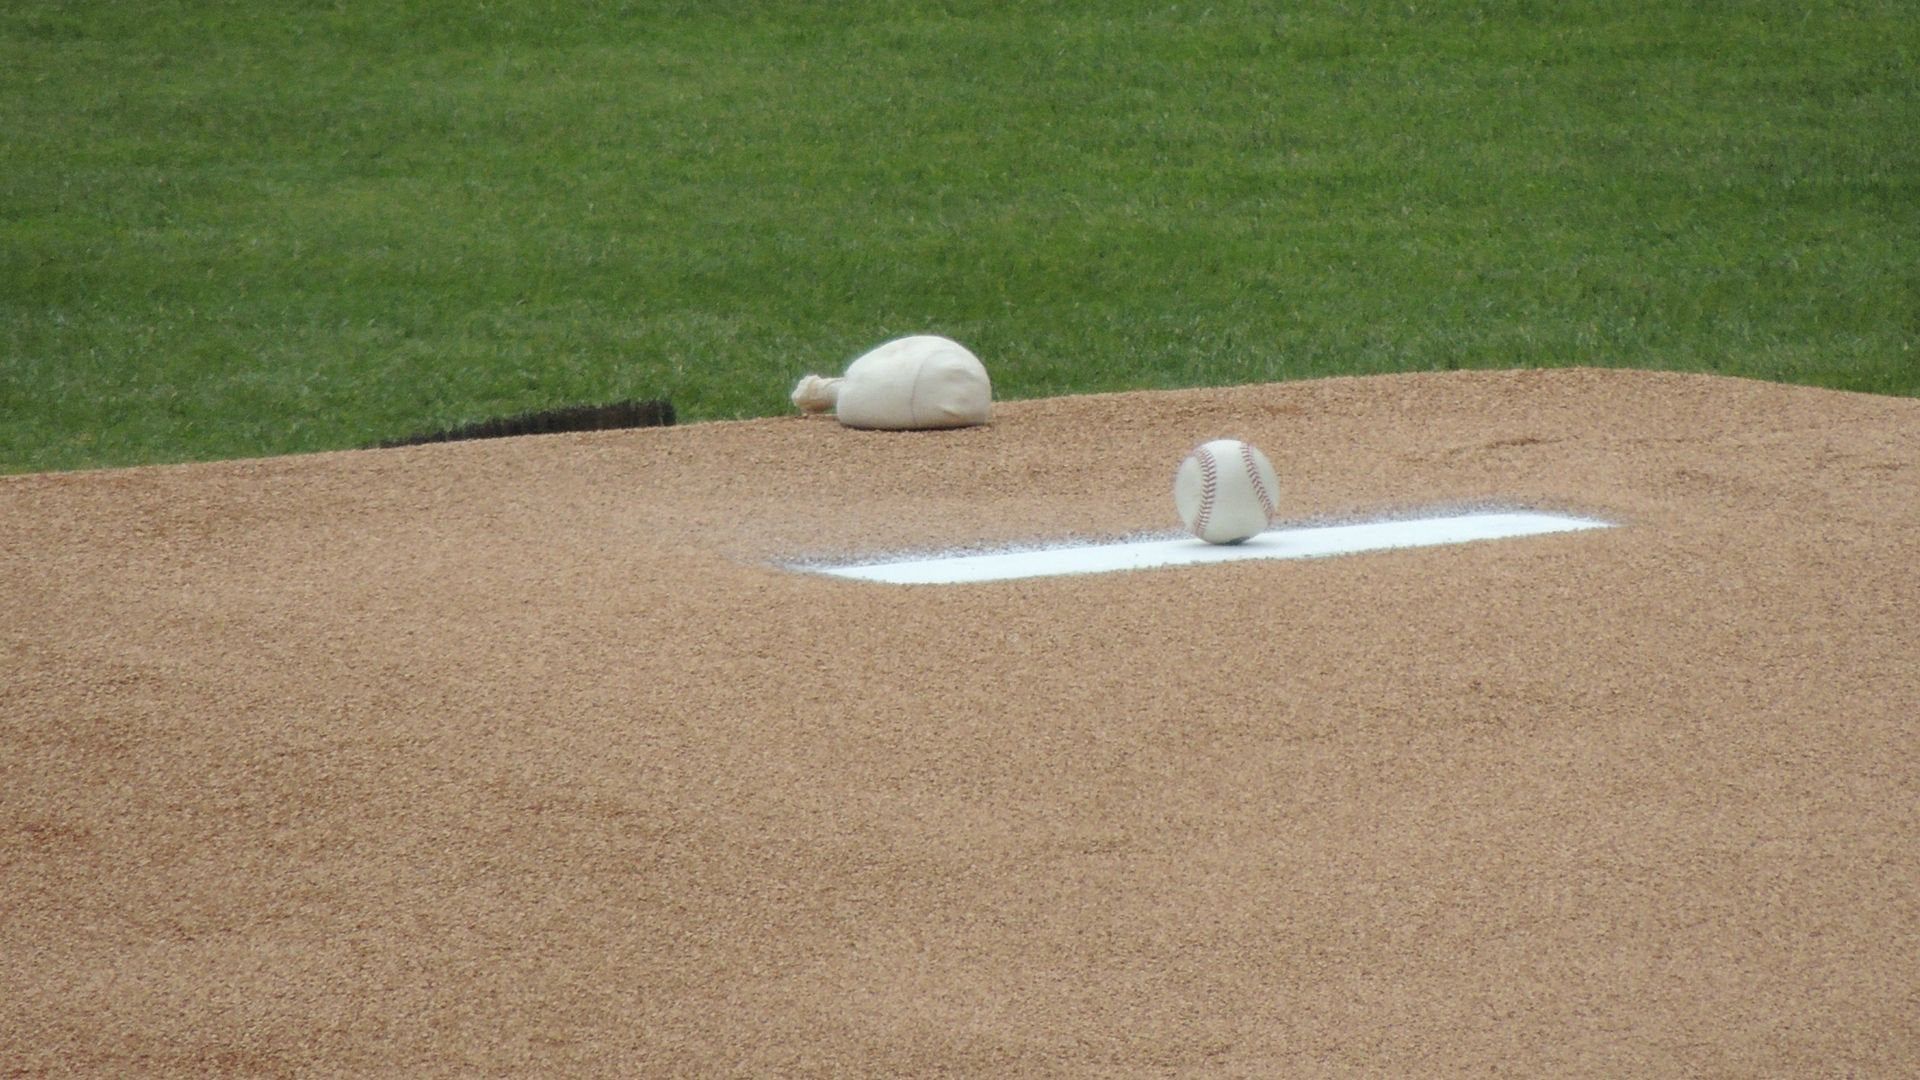 Baseball Day ball on the pitching mound (1920x1080)